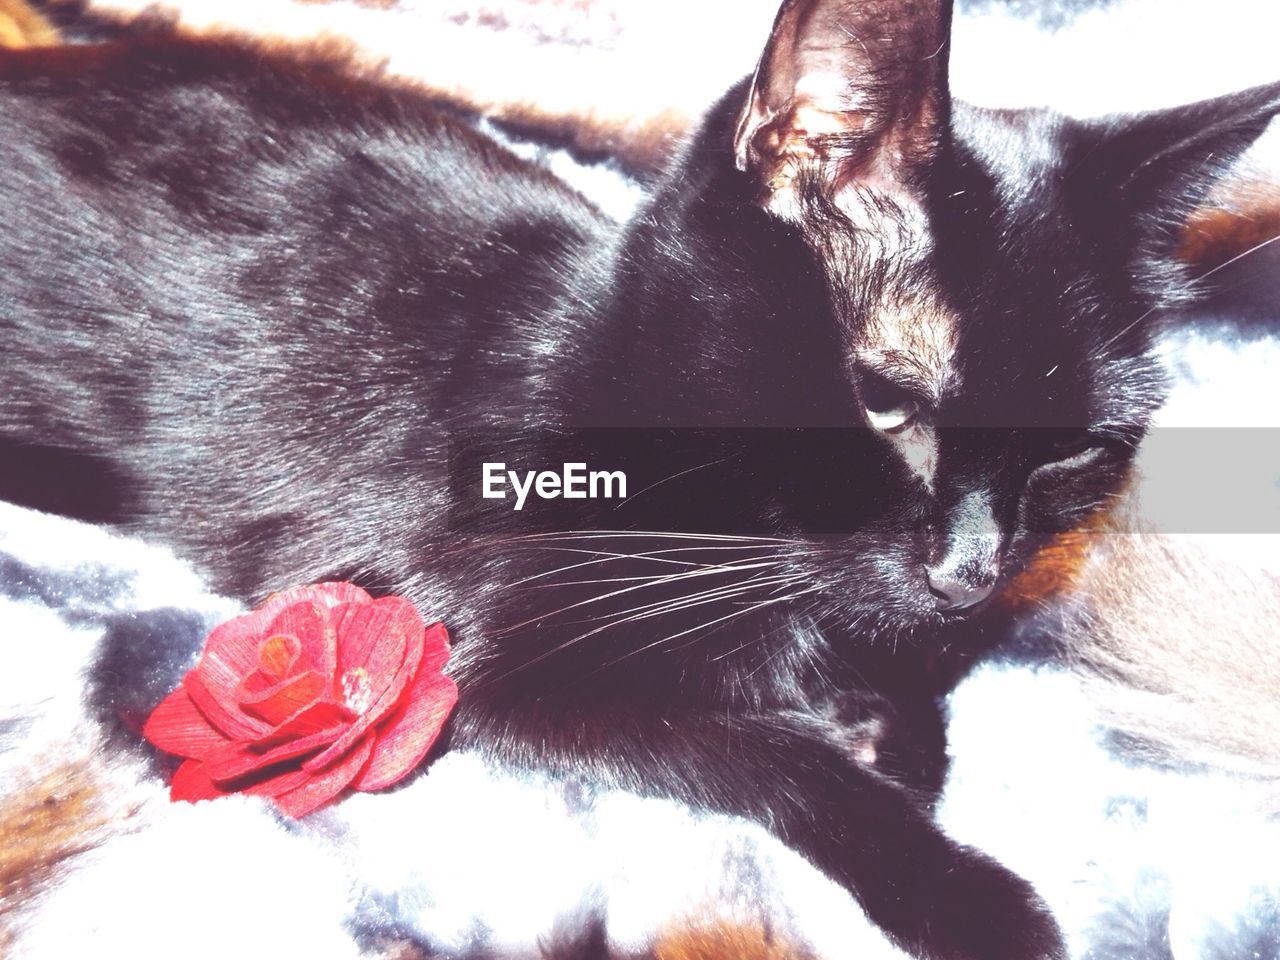 Black cat and artificial rose